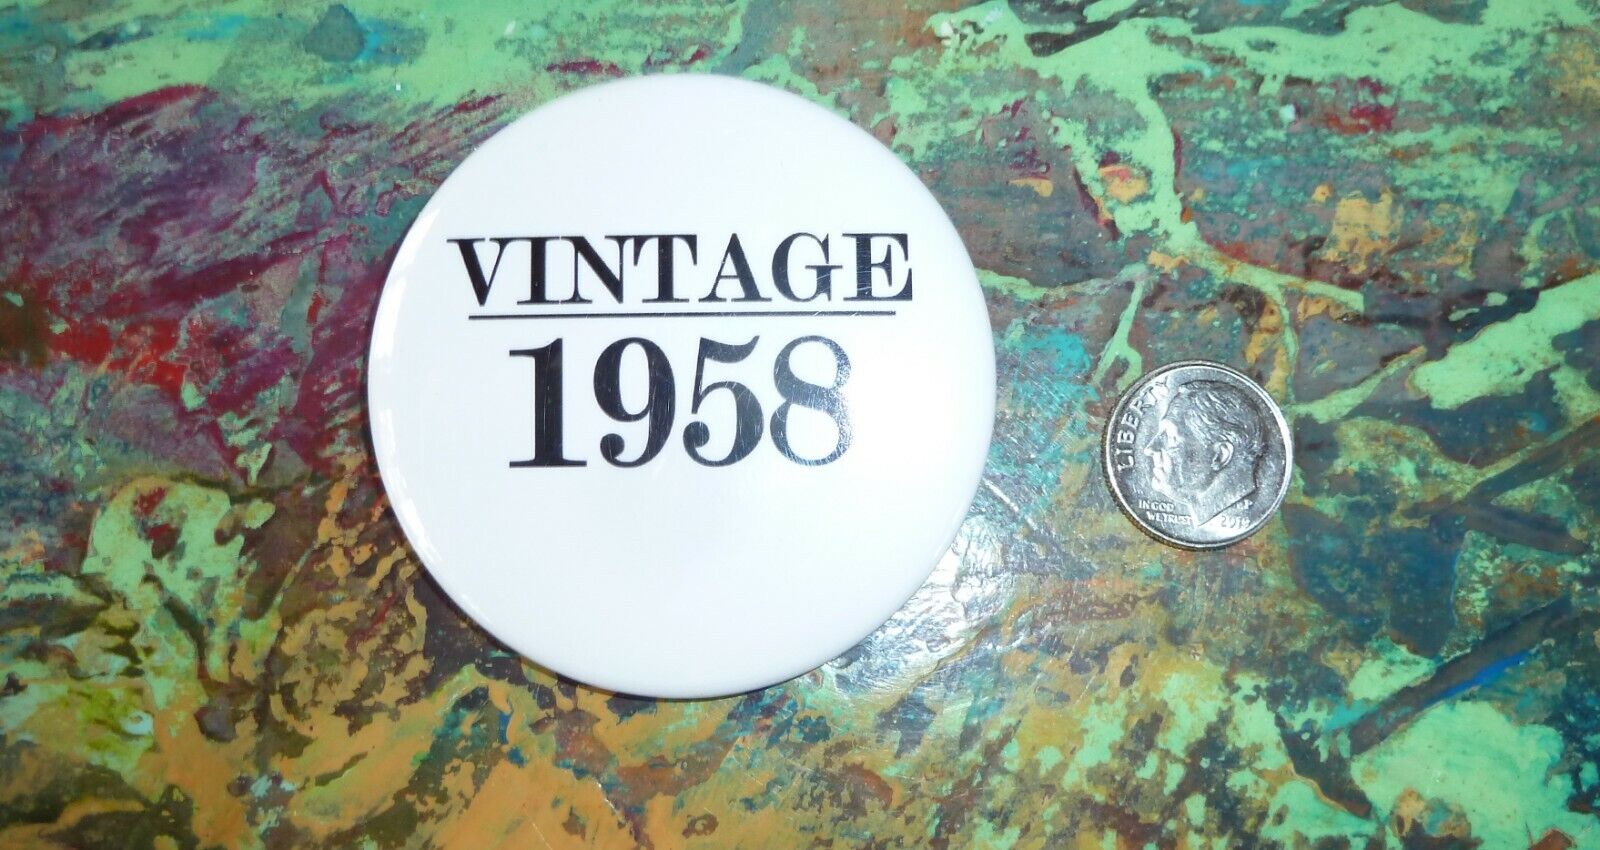 Vintage Pinback Button **  VINTAGE 1958  **  Great birthday gift